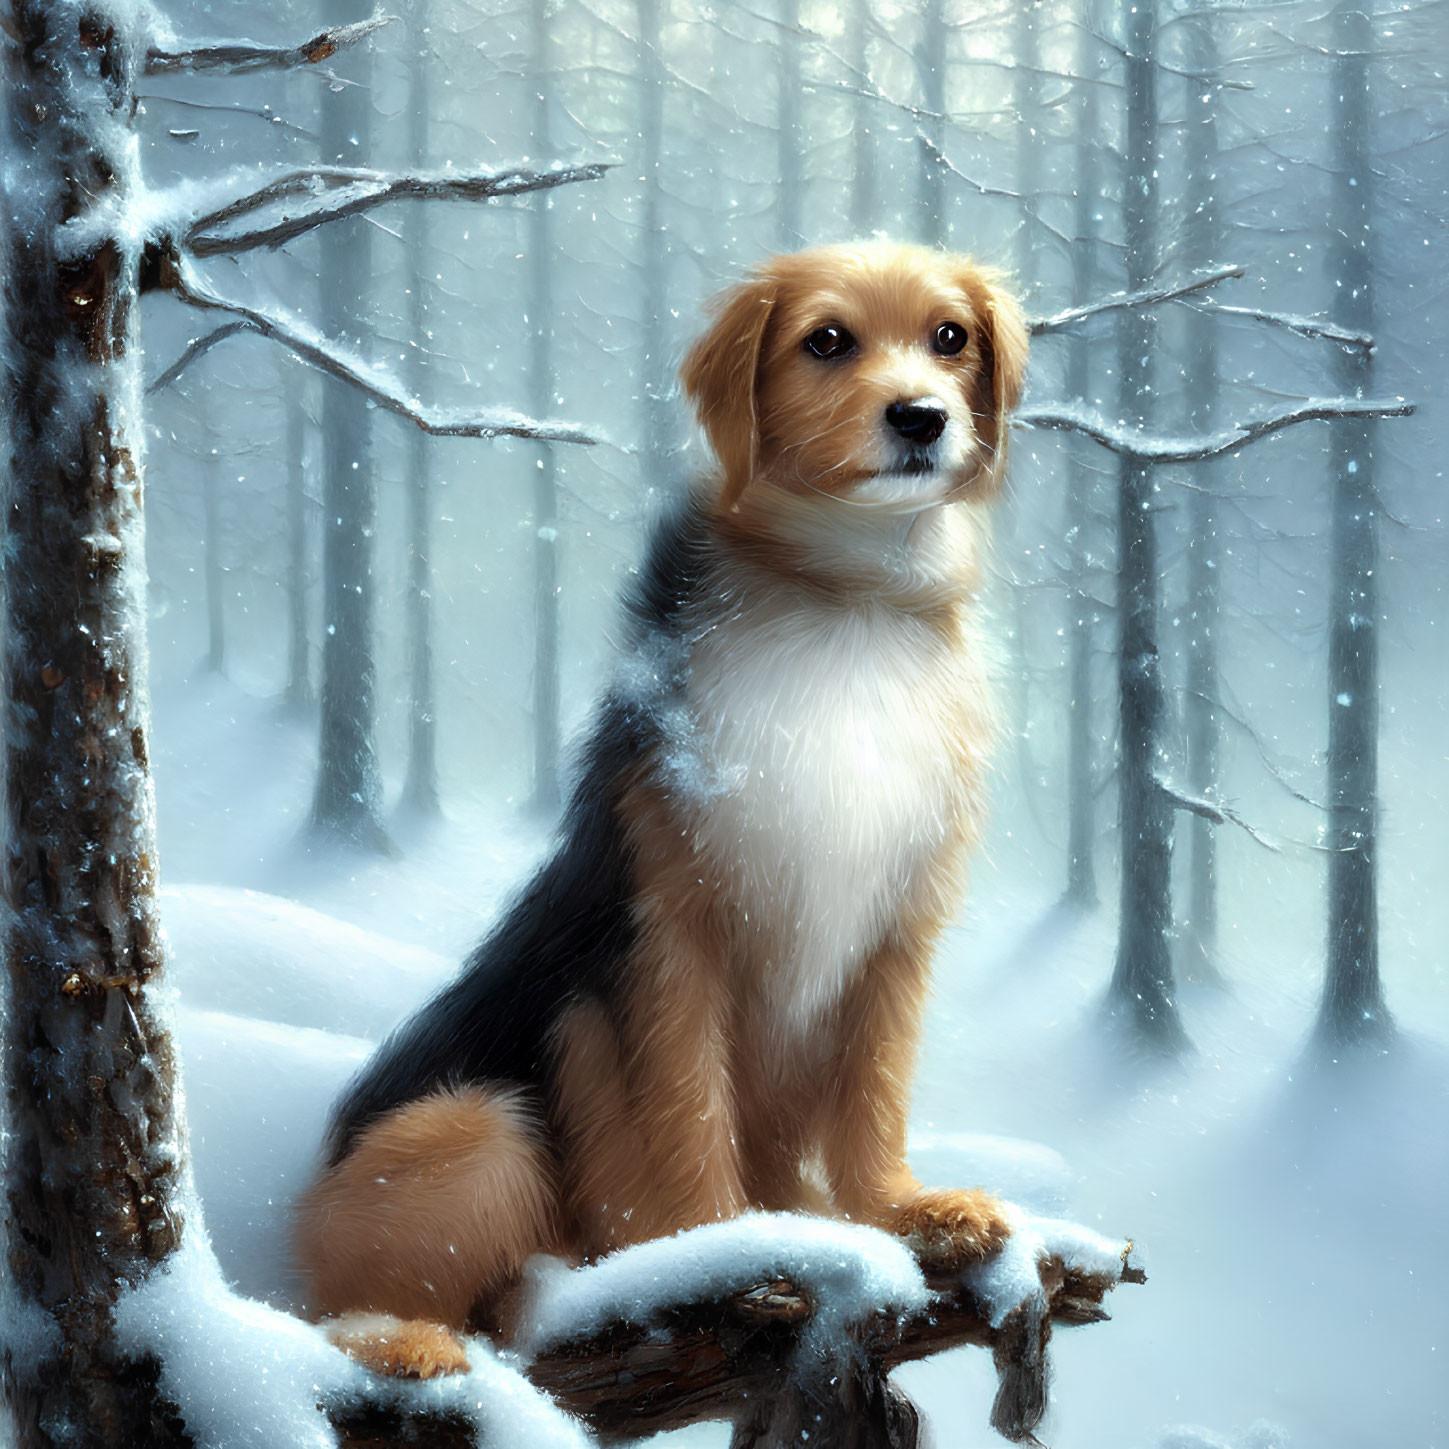 Golden-Brown Dog Sitting on Snowy Branch in Winter Forest